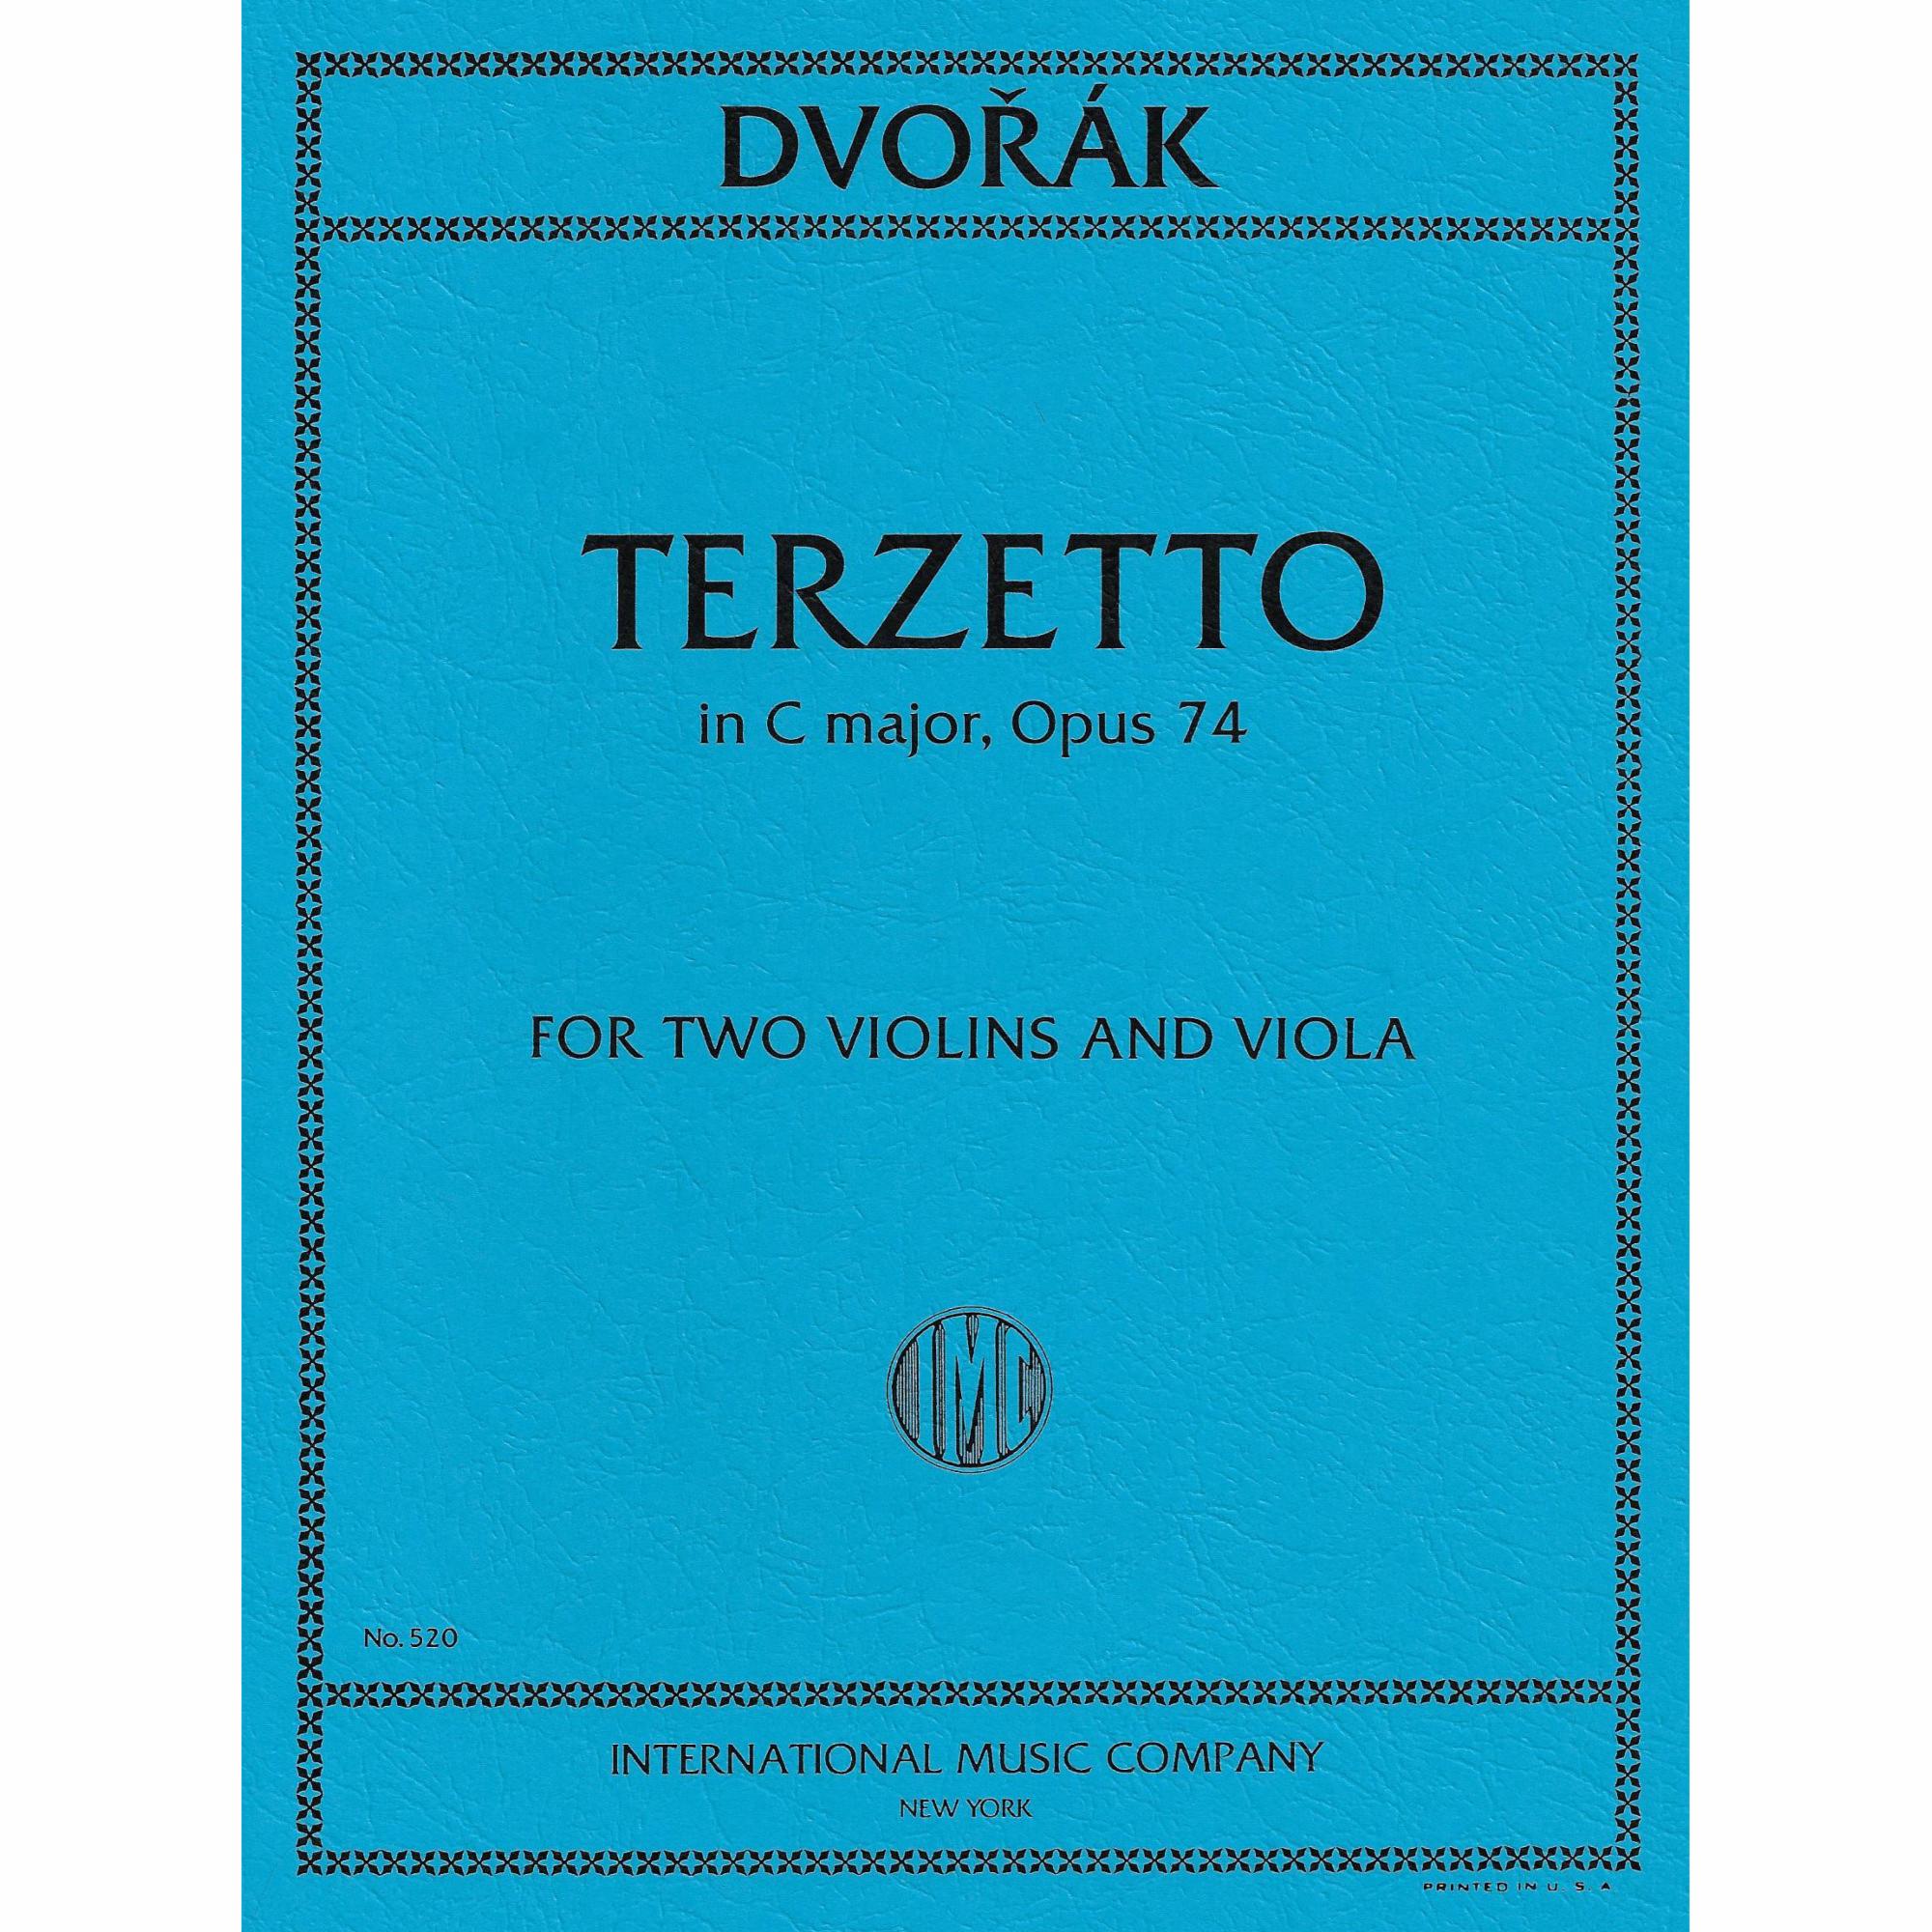 Dvorak -- Terzetto in C Major, Op. 74 for Two Violins and Viola